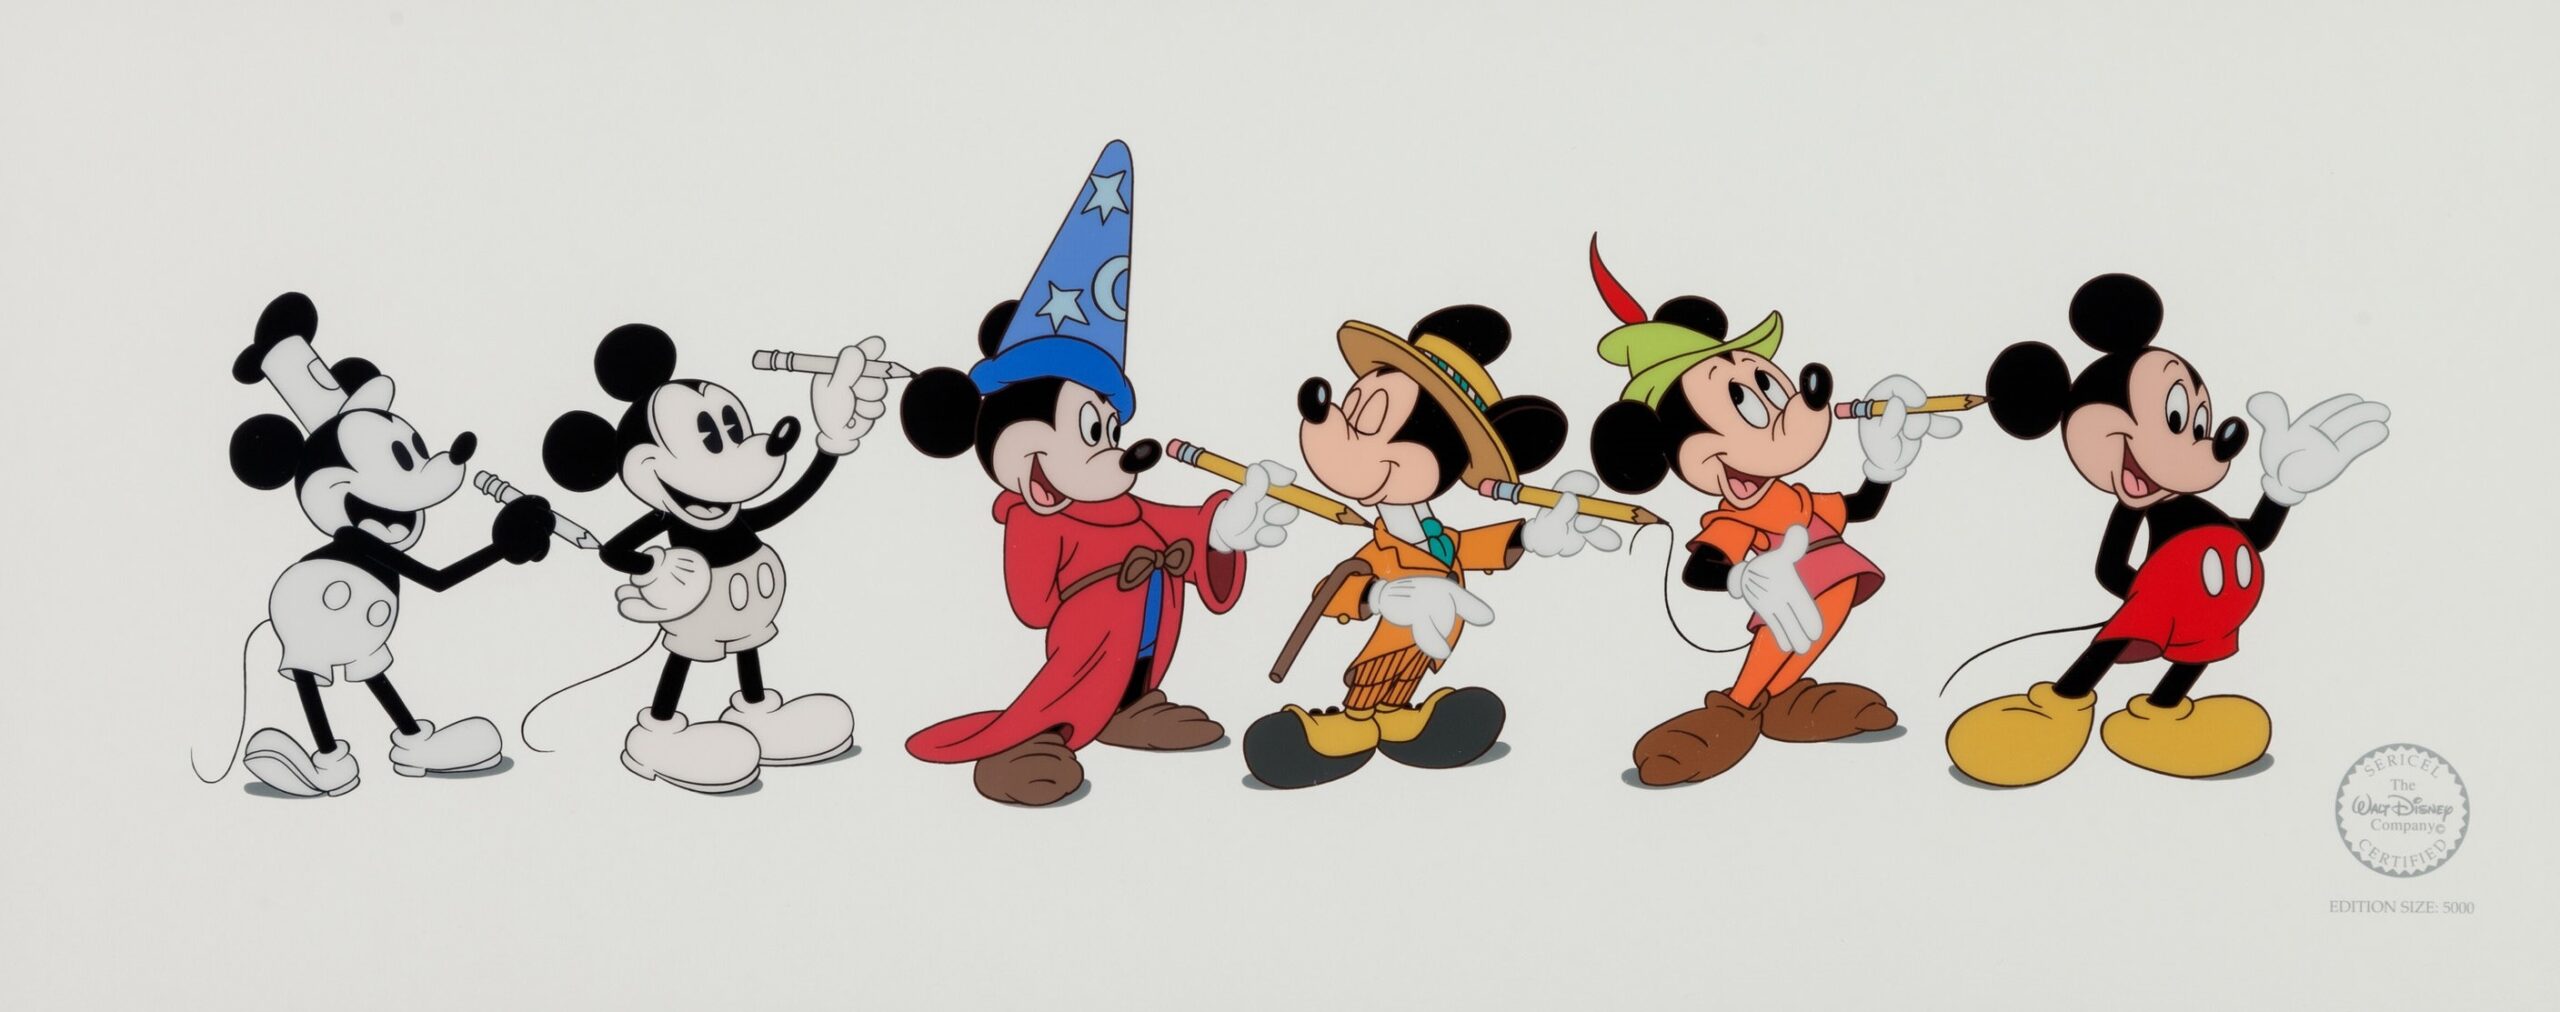 Celebrating a Century of Magic: Disney’s 100th Anniversary